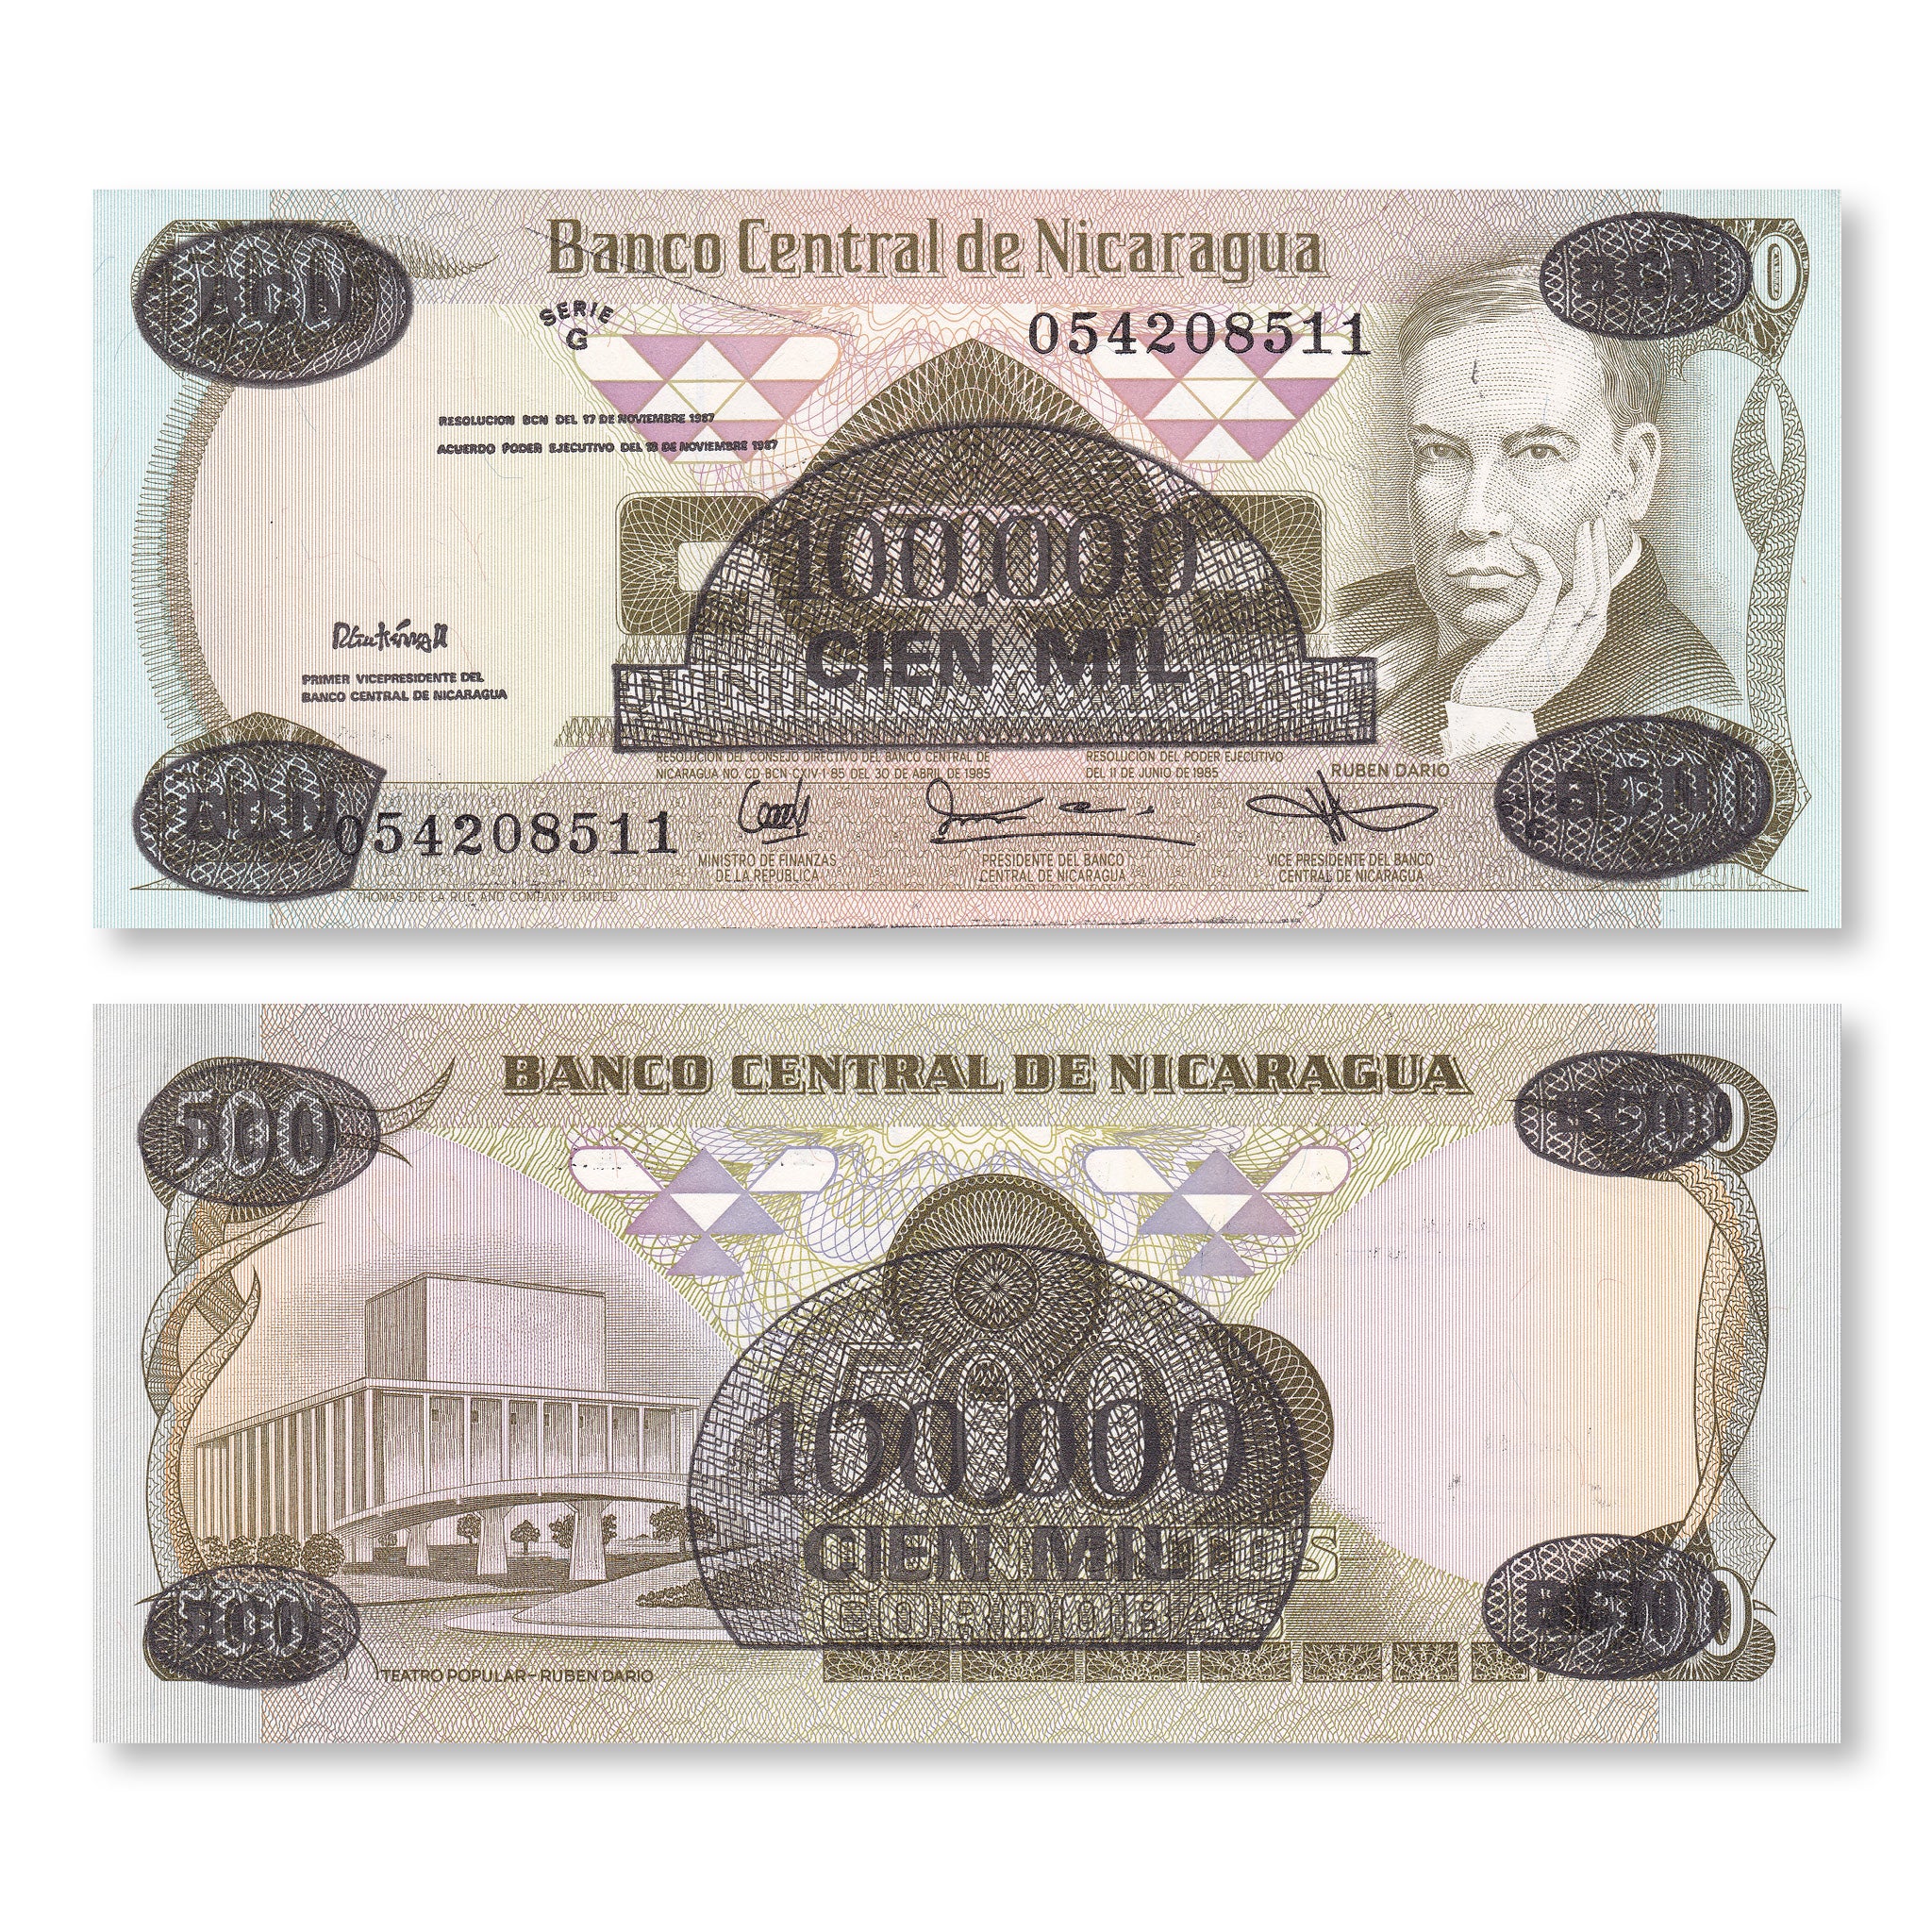 Nicaragua 100000 Córdobas, 1987, B443a, P149, UNC - Robert's World Money - World Banknotes